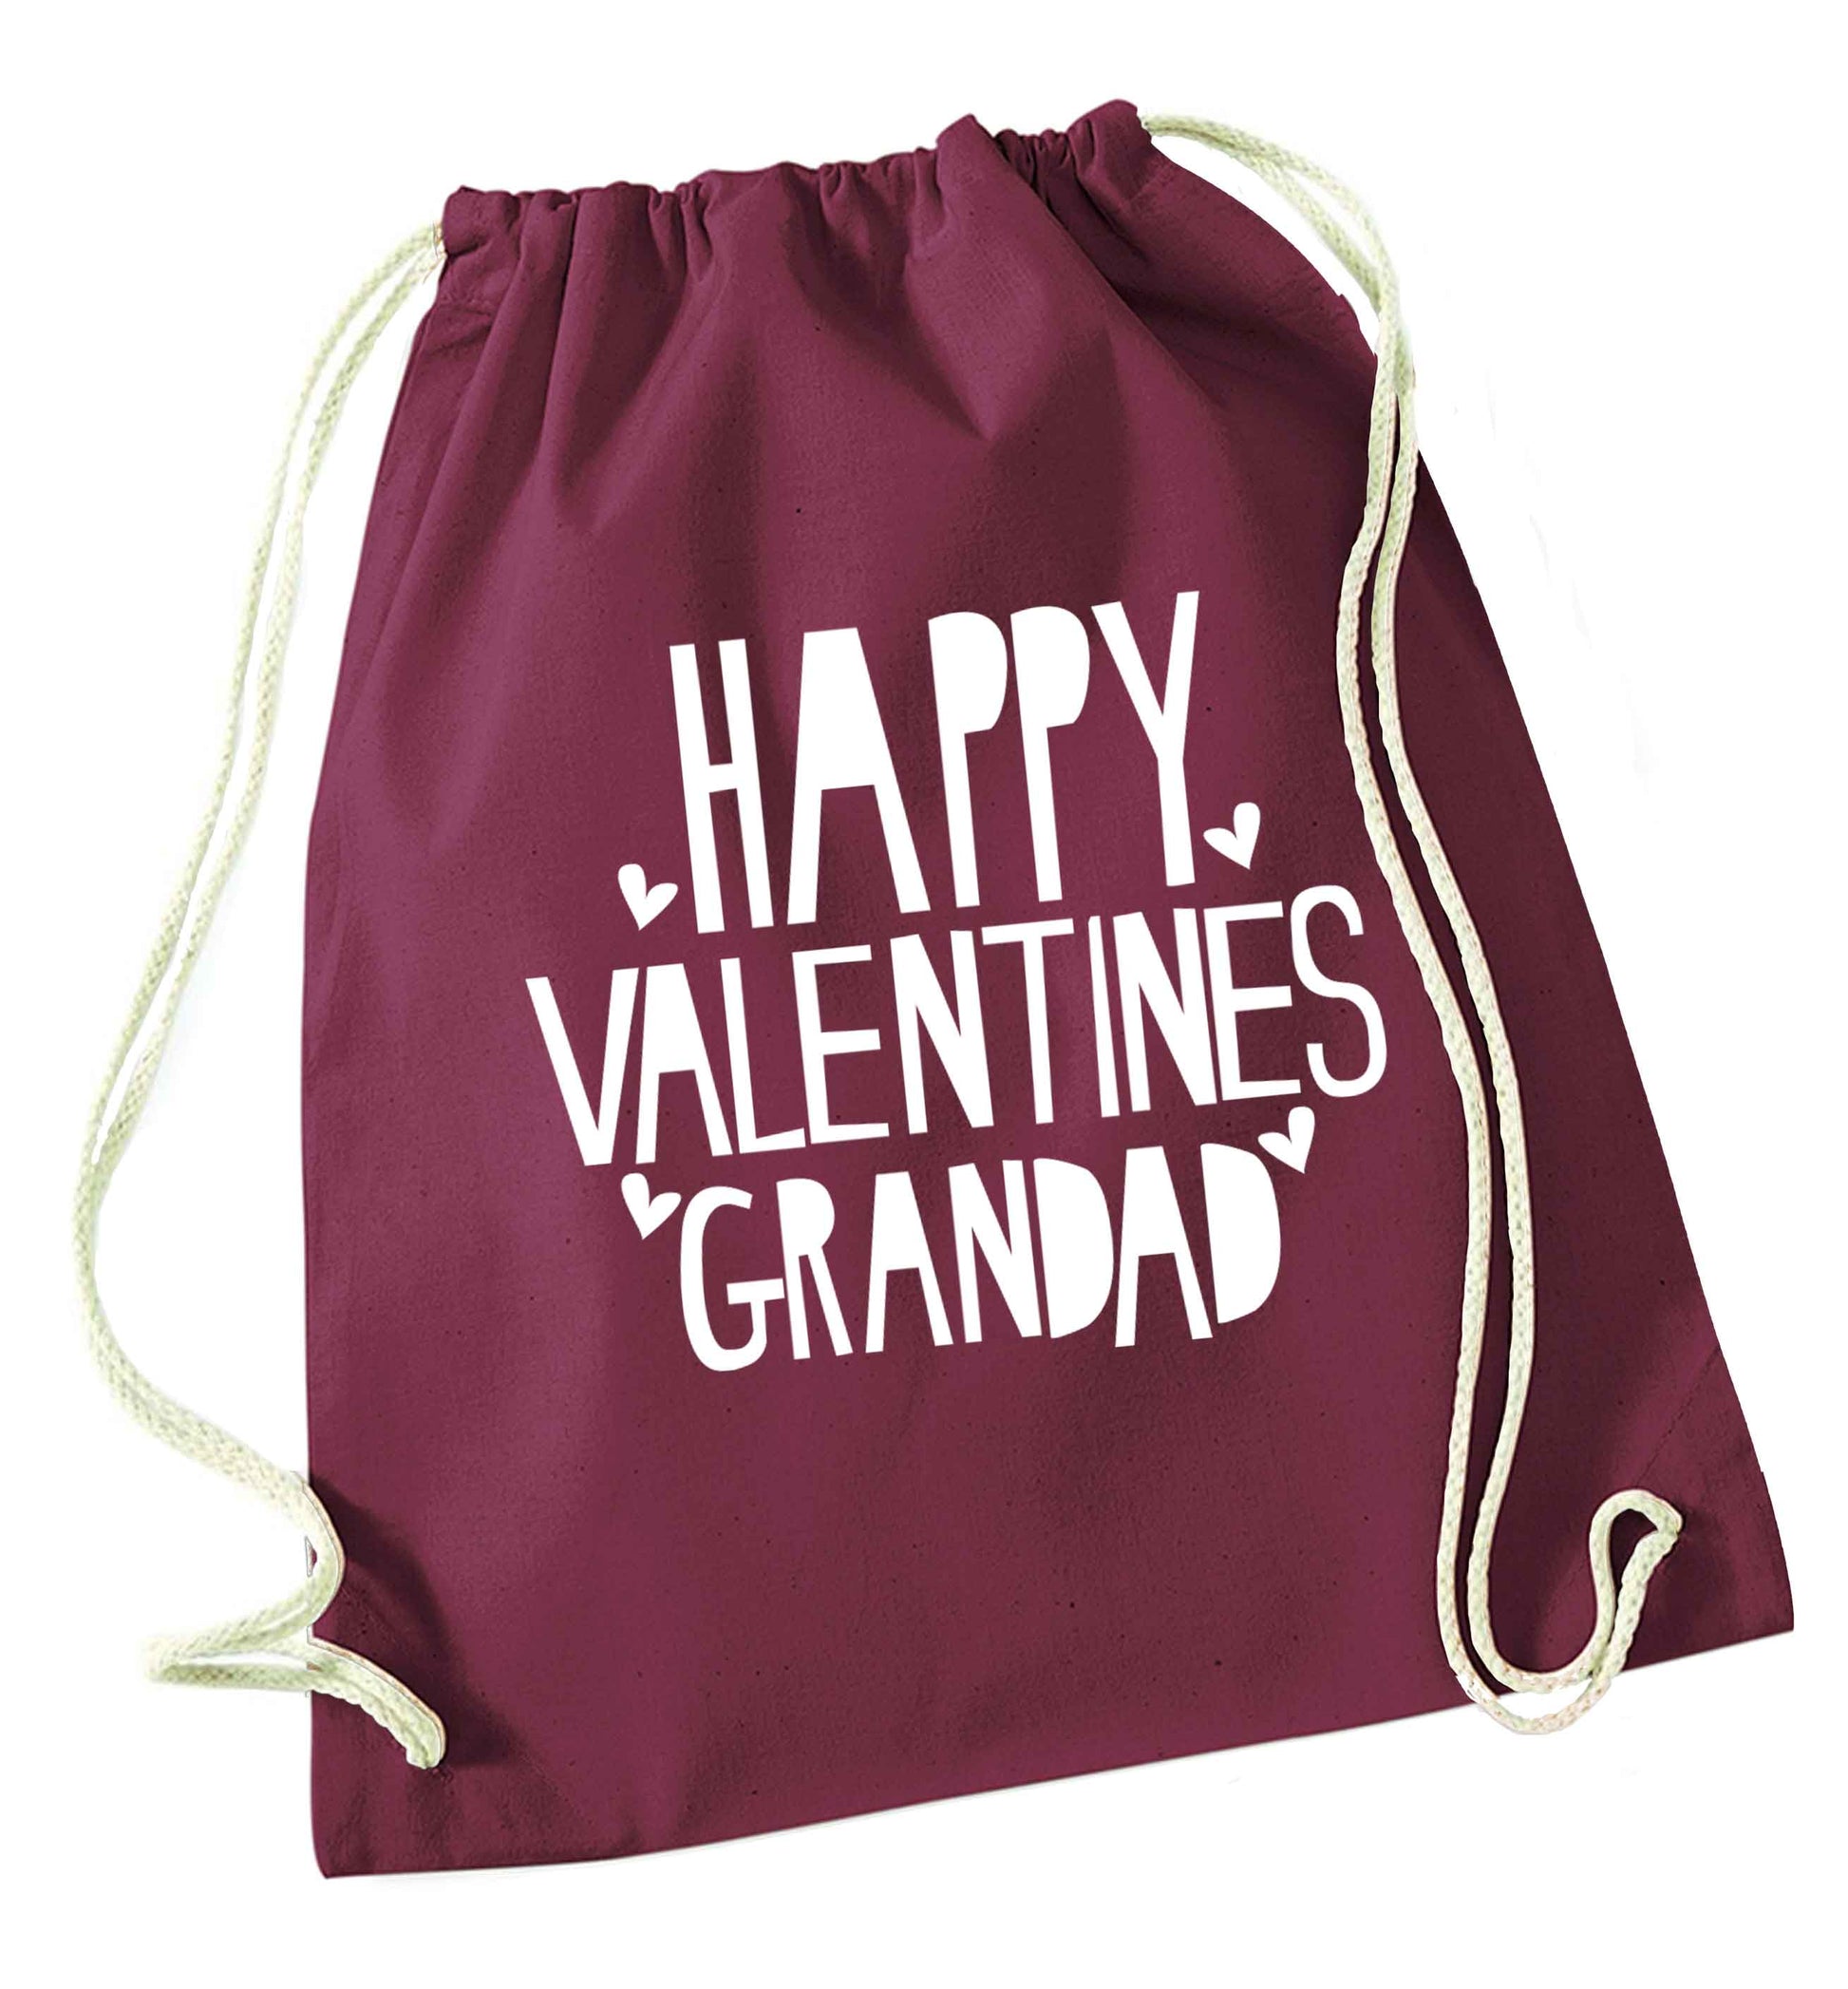 Happy valentines grandad maroon drawstring bag